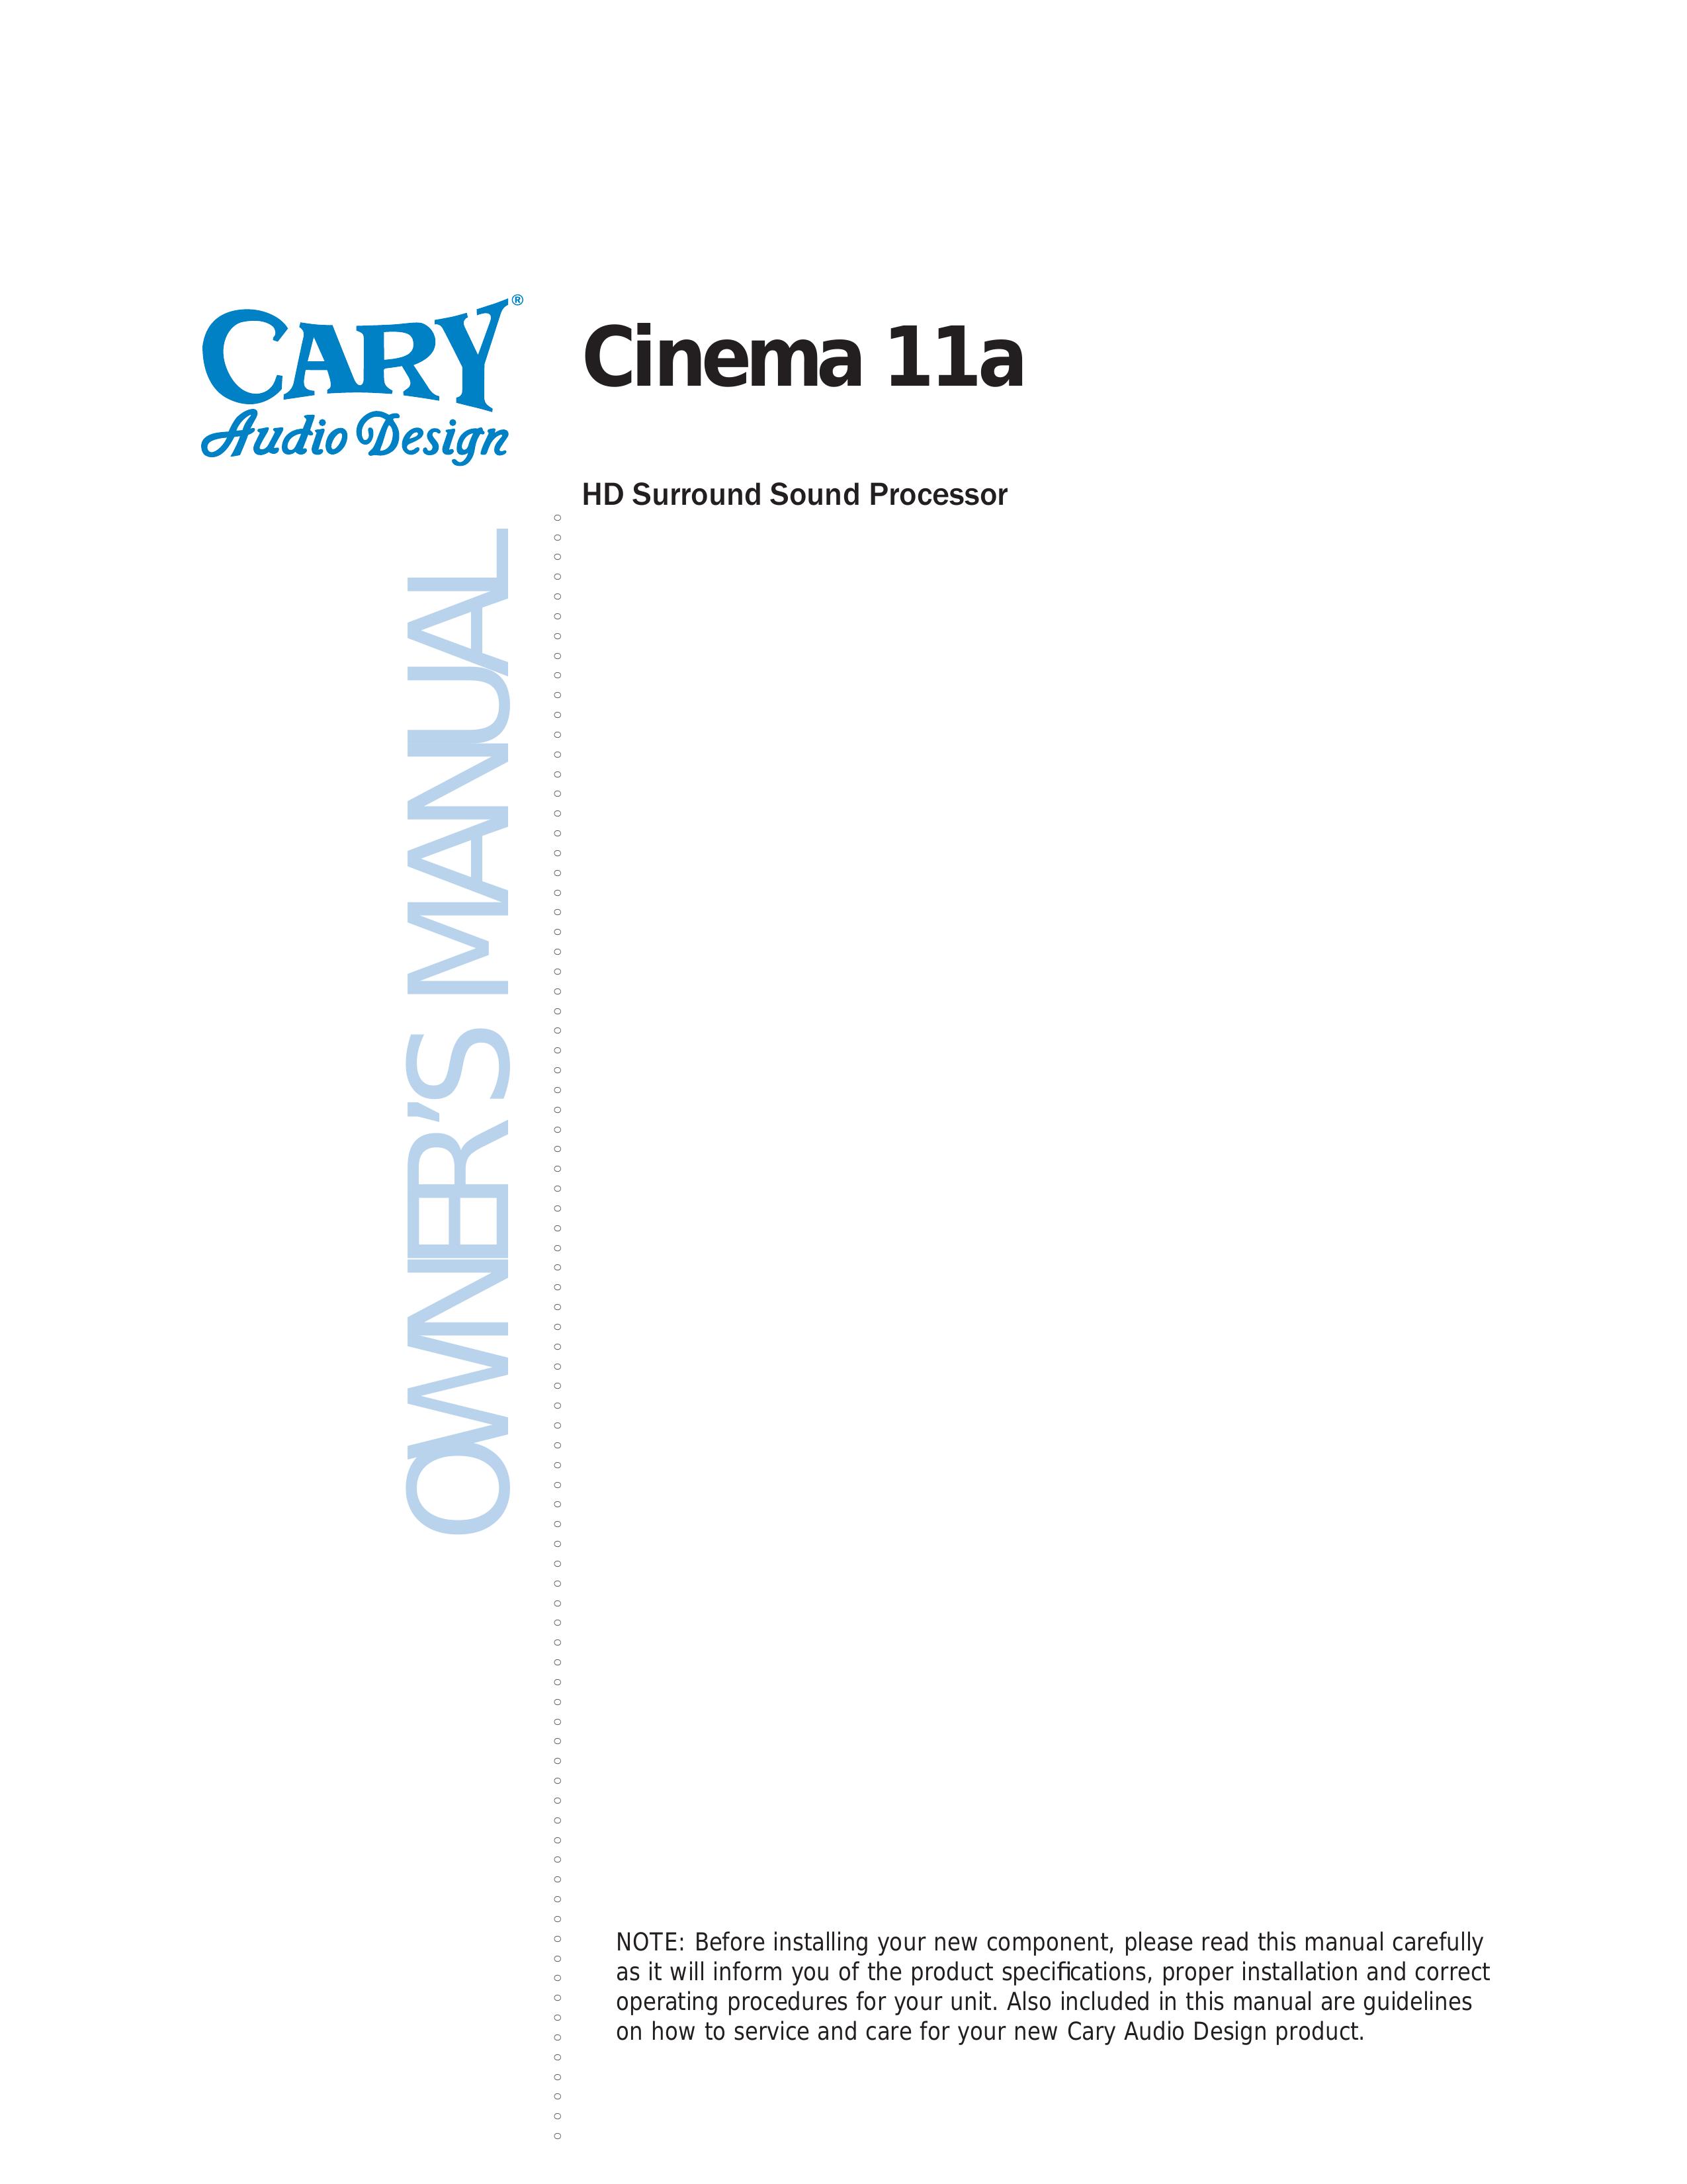 Cary Audio Design Cinema 11a DJ Equipment User Manual